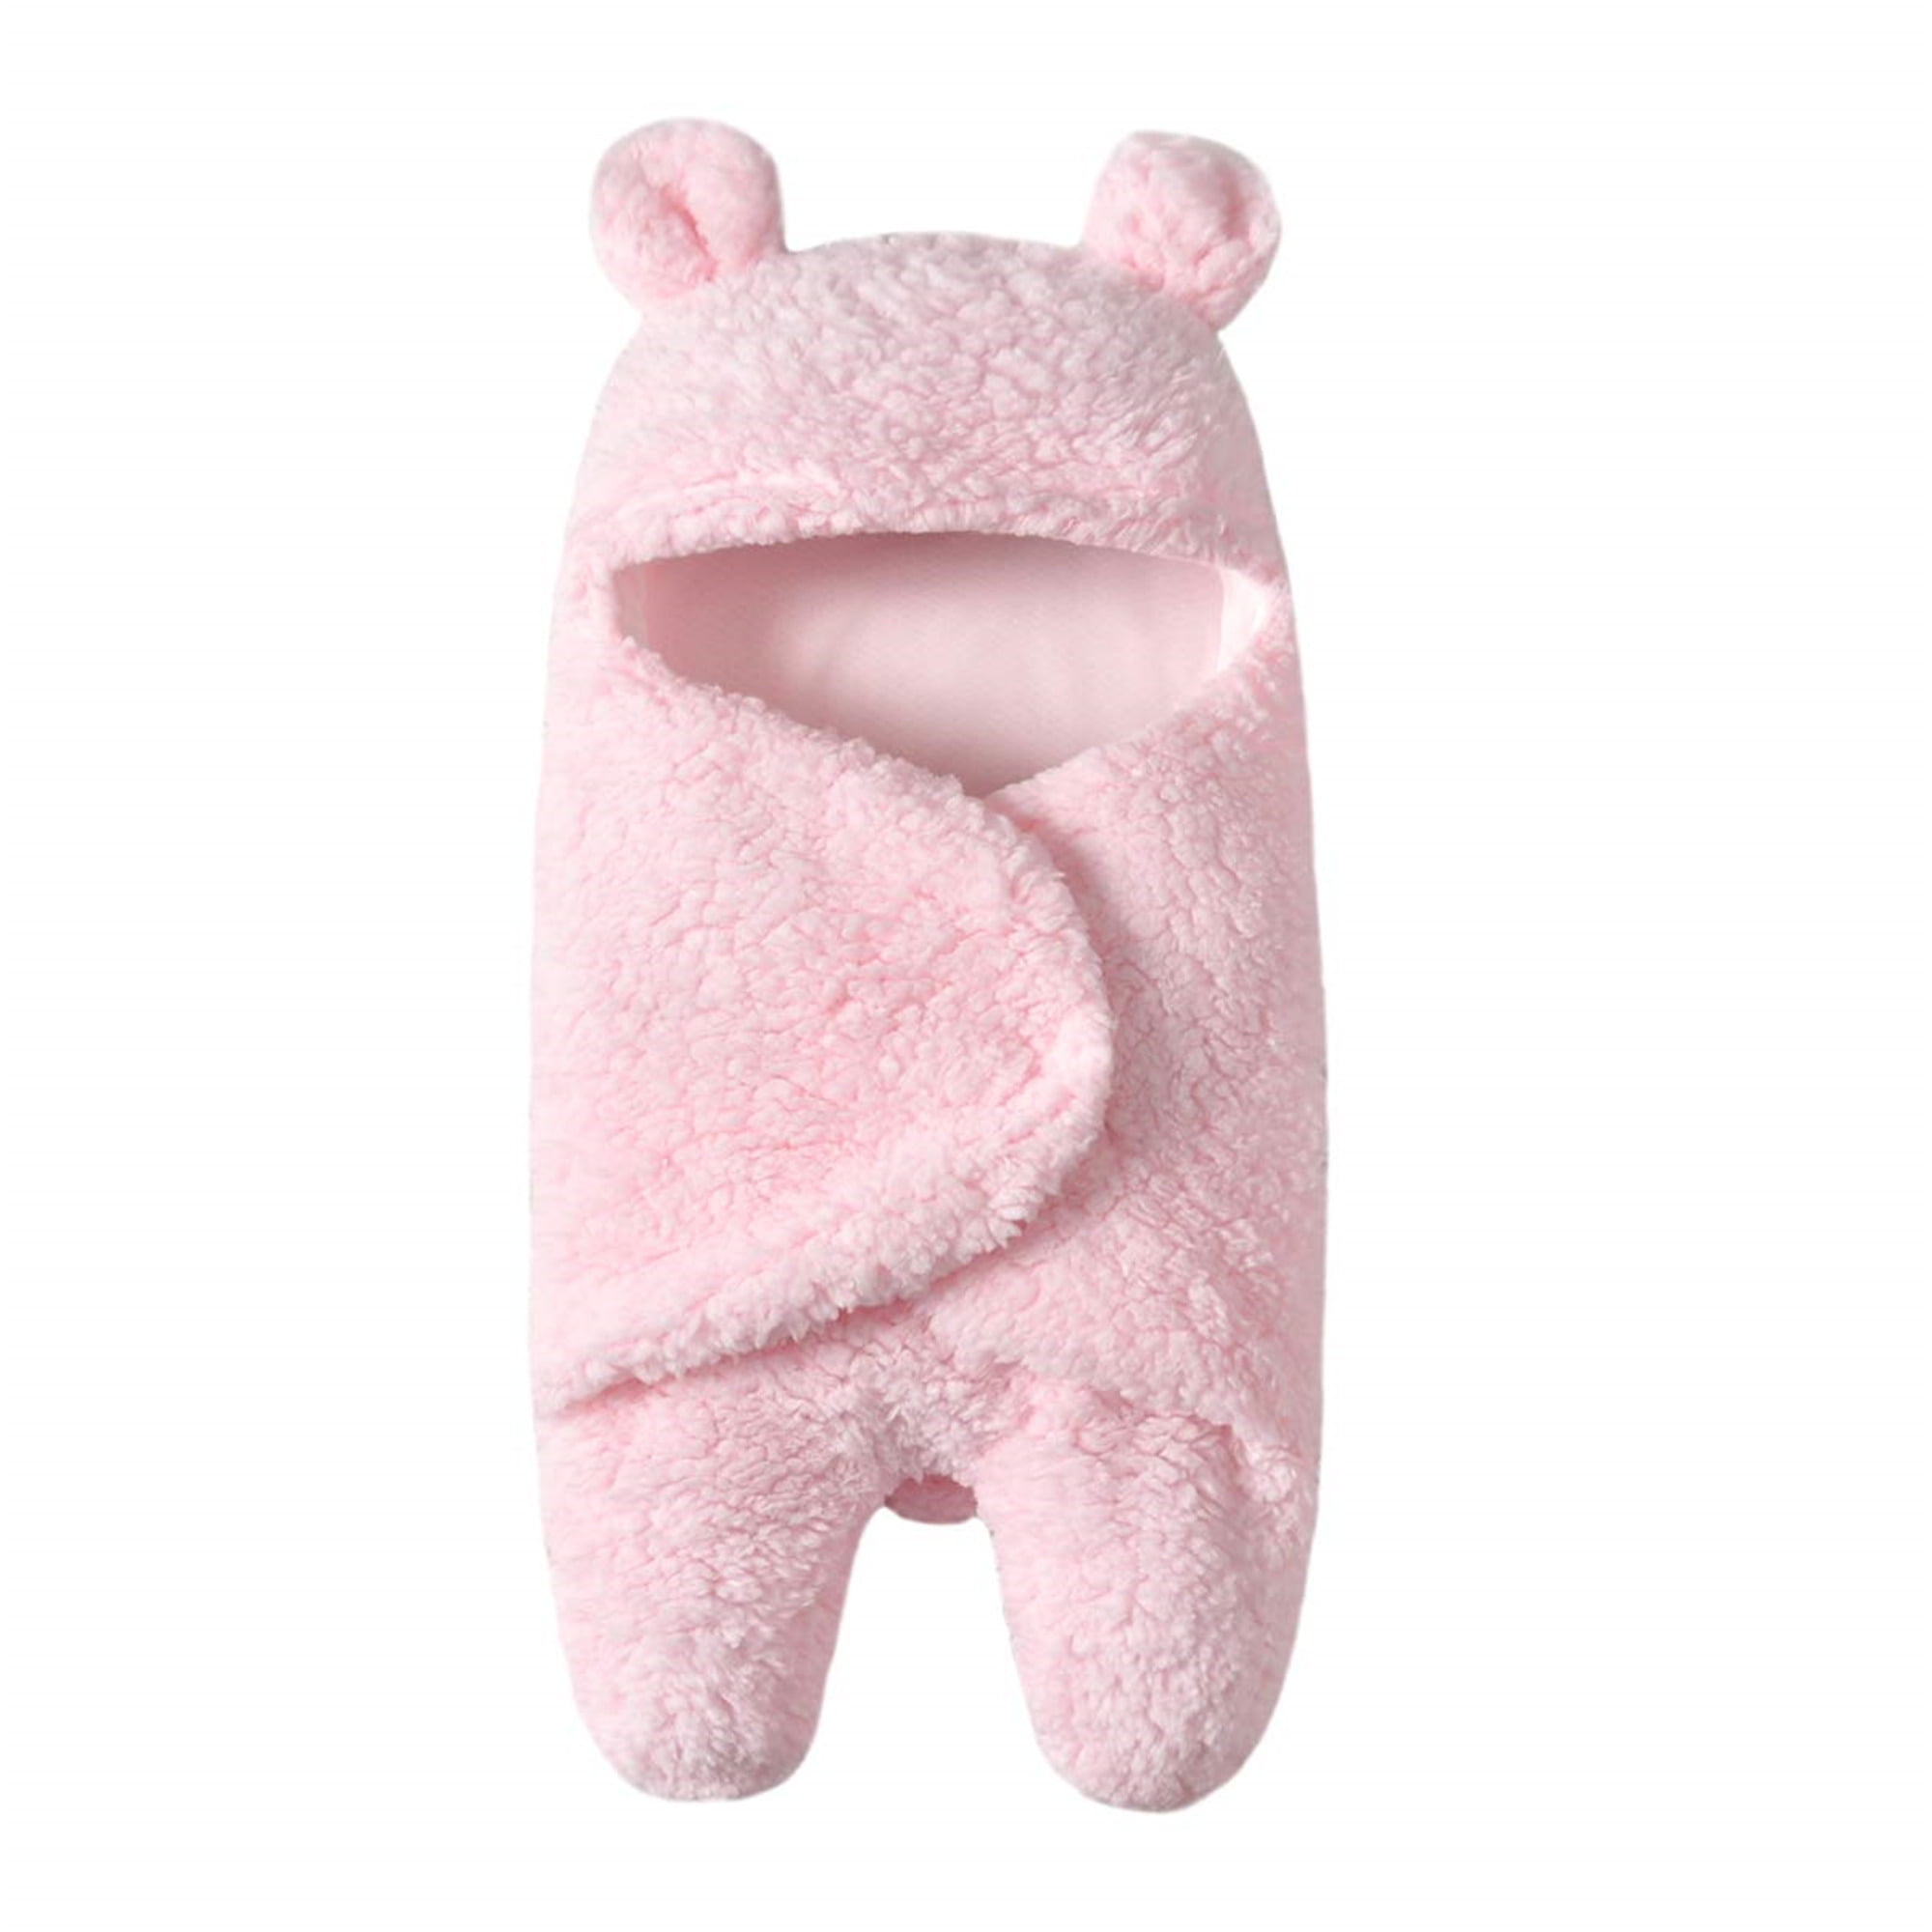 Baby Deluxe Soft & Cuddly Teddy Bear Blanket Wrap 905 